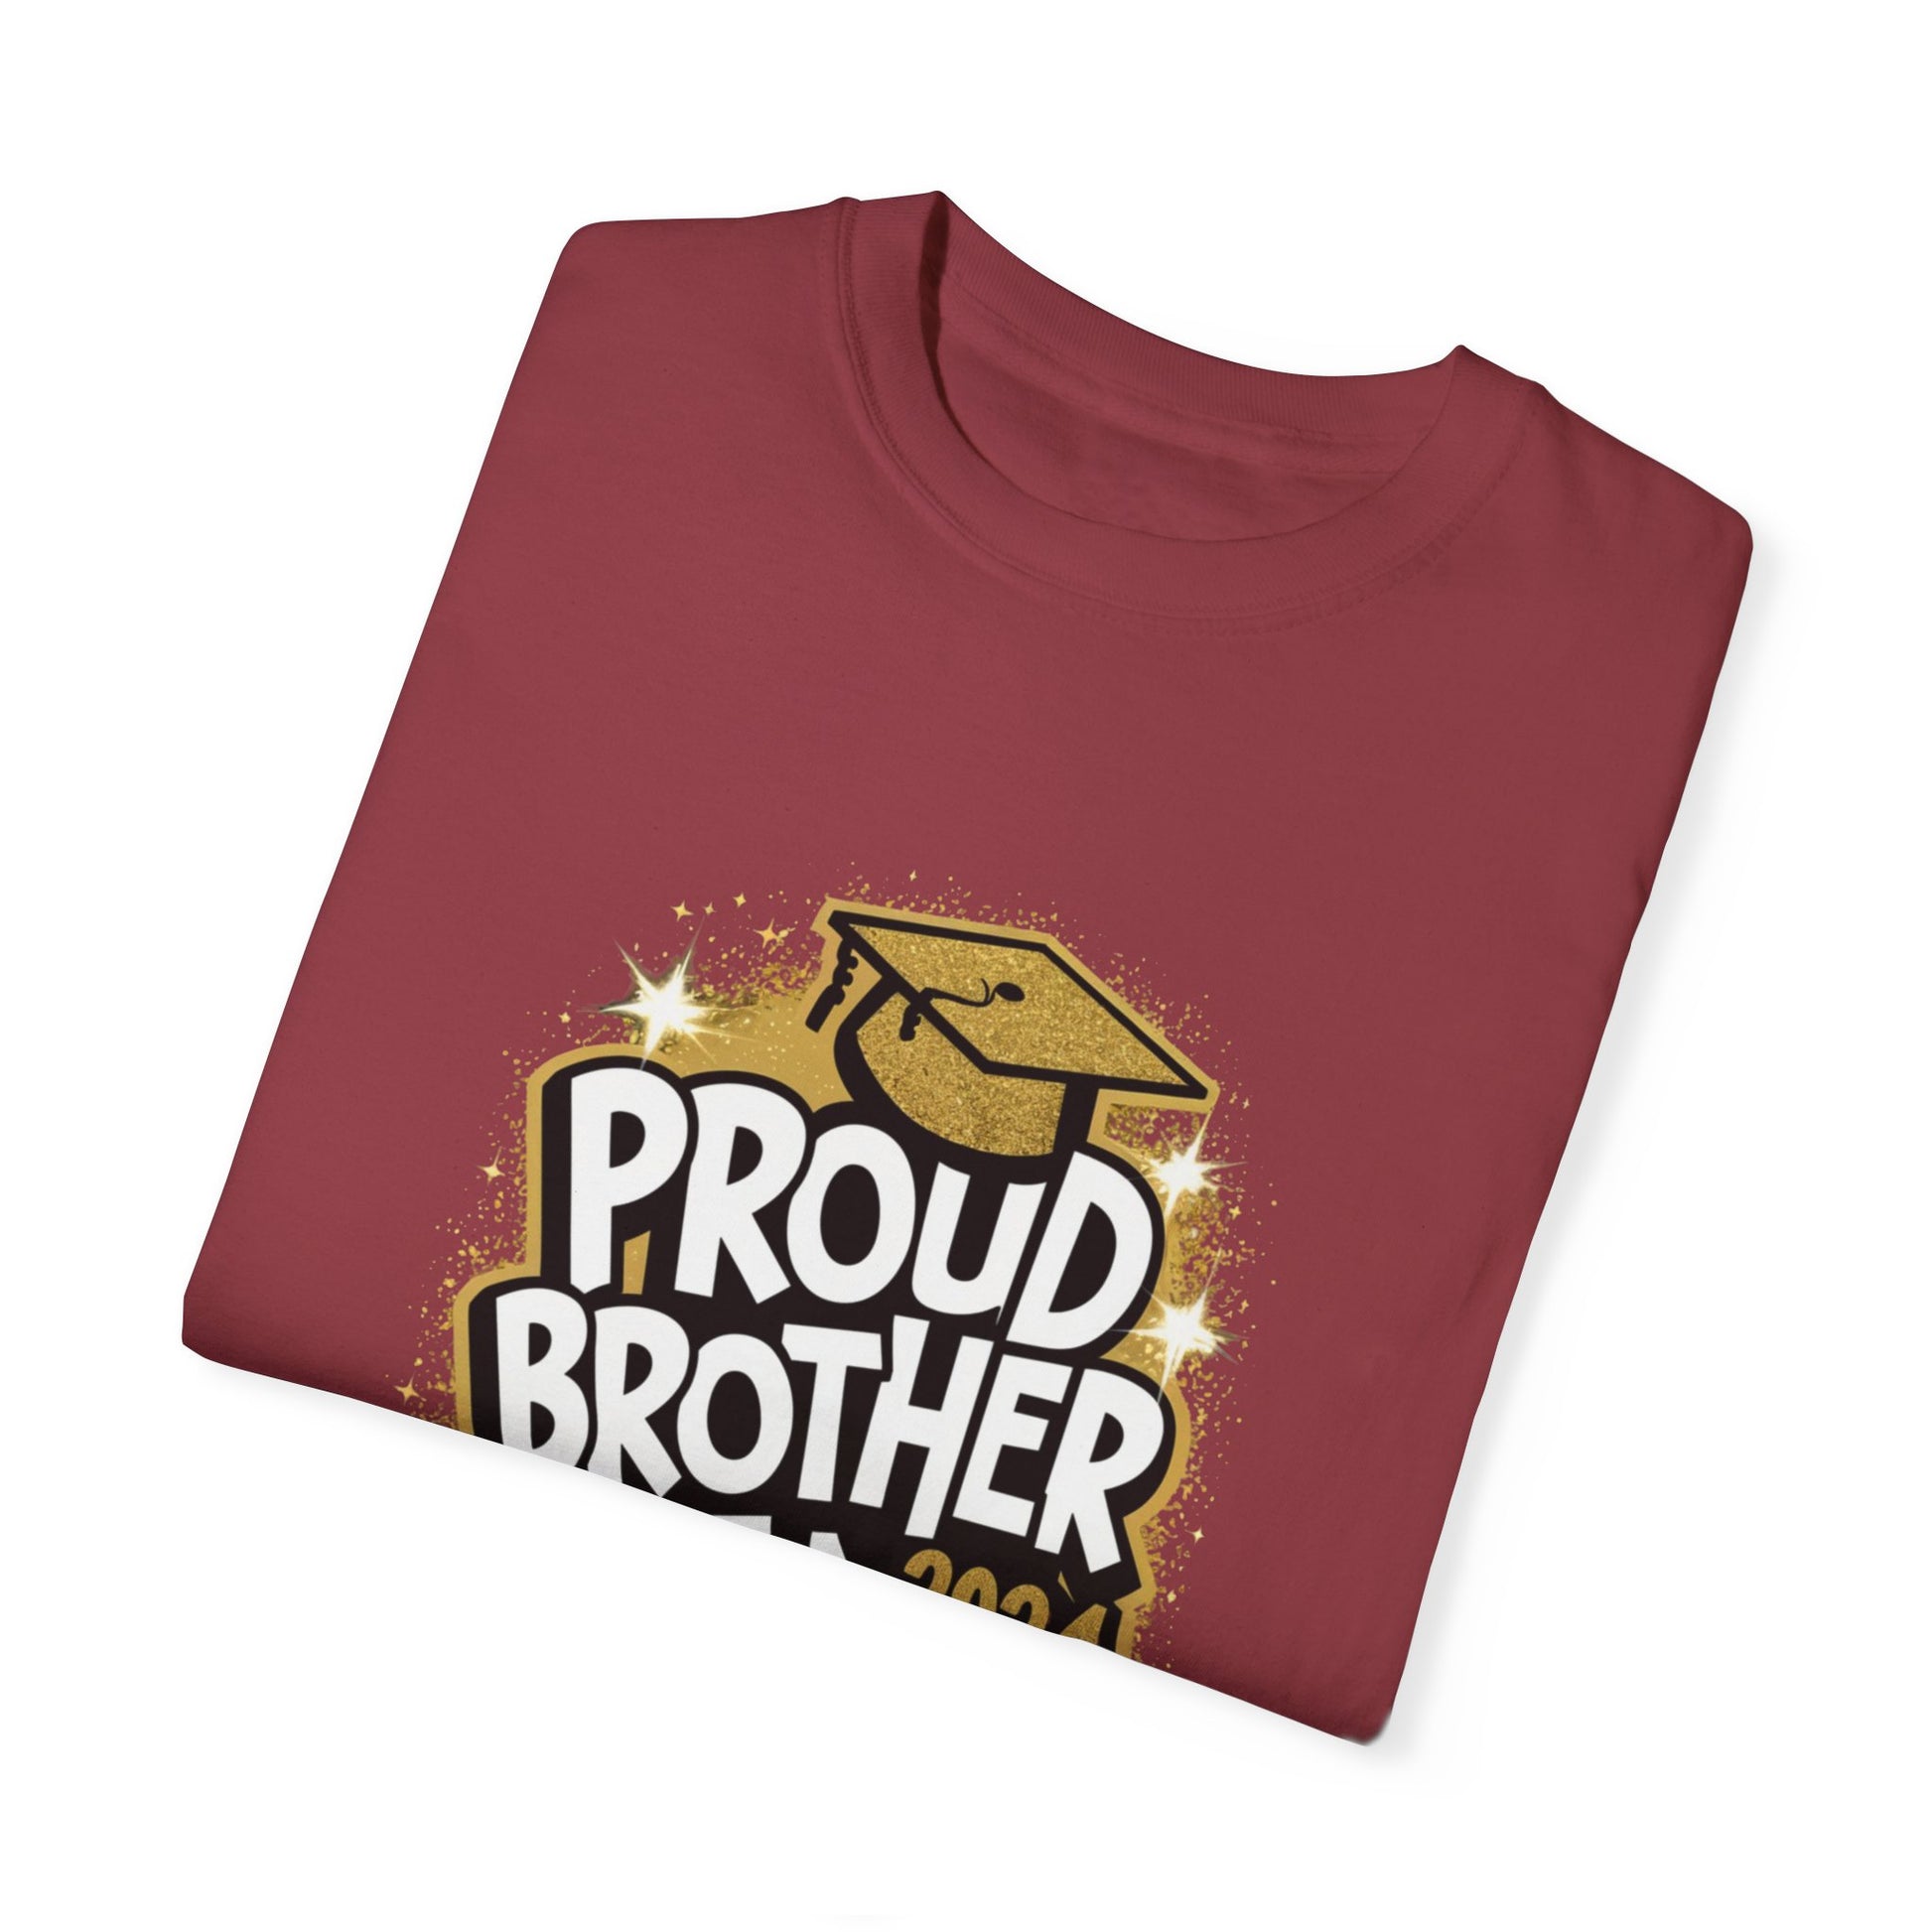 Proud Brother of a 2024 Graduate Unisex Garment-dyed T-shirt Cotton Funny Humorous Graphic Soft Premium Unisex Men Women Chili T-shirt Birthday Gift-35